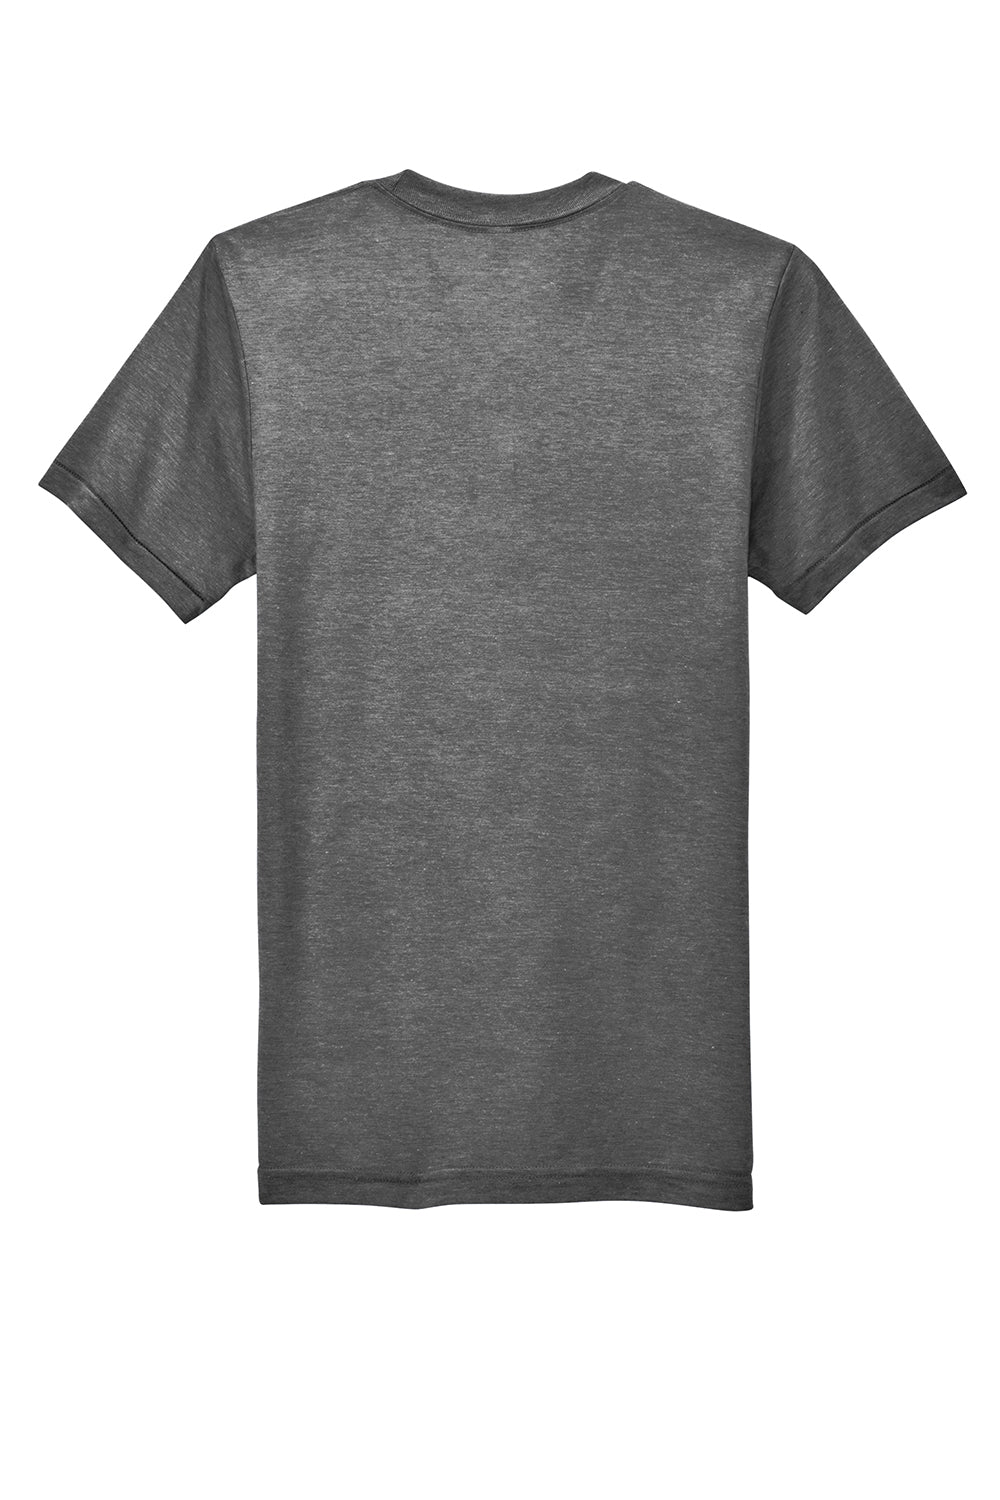 American Apparel TR401 Mens Track Short Sleeve Crewneck T-Shirt Athletic Grey Flat Back